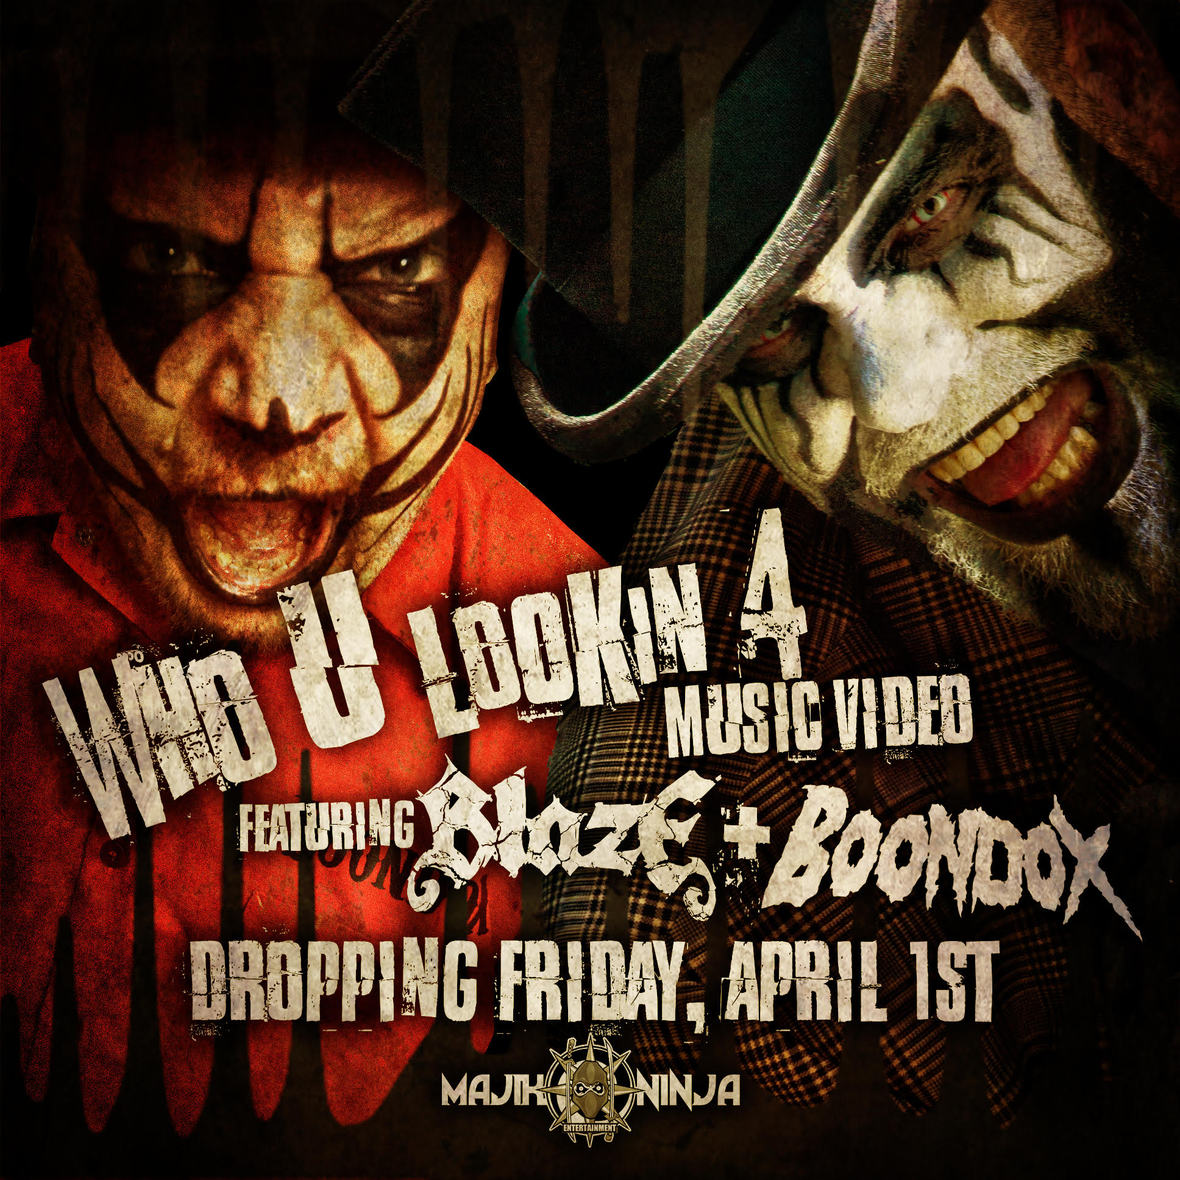 Blaze Ya Dead Homie & Boondox Release "Who U Lookin' 4" Music Video Featuring Jamie Madrox of Twiztid